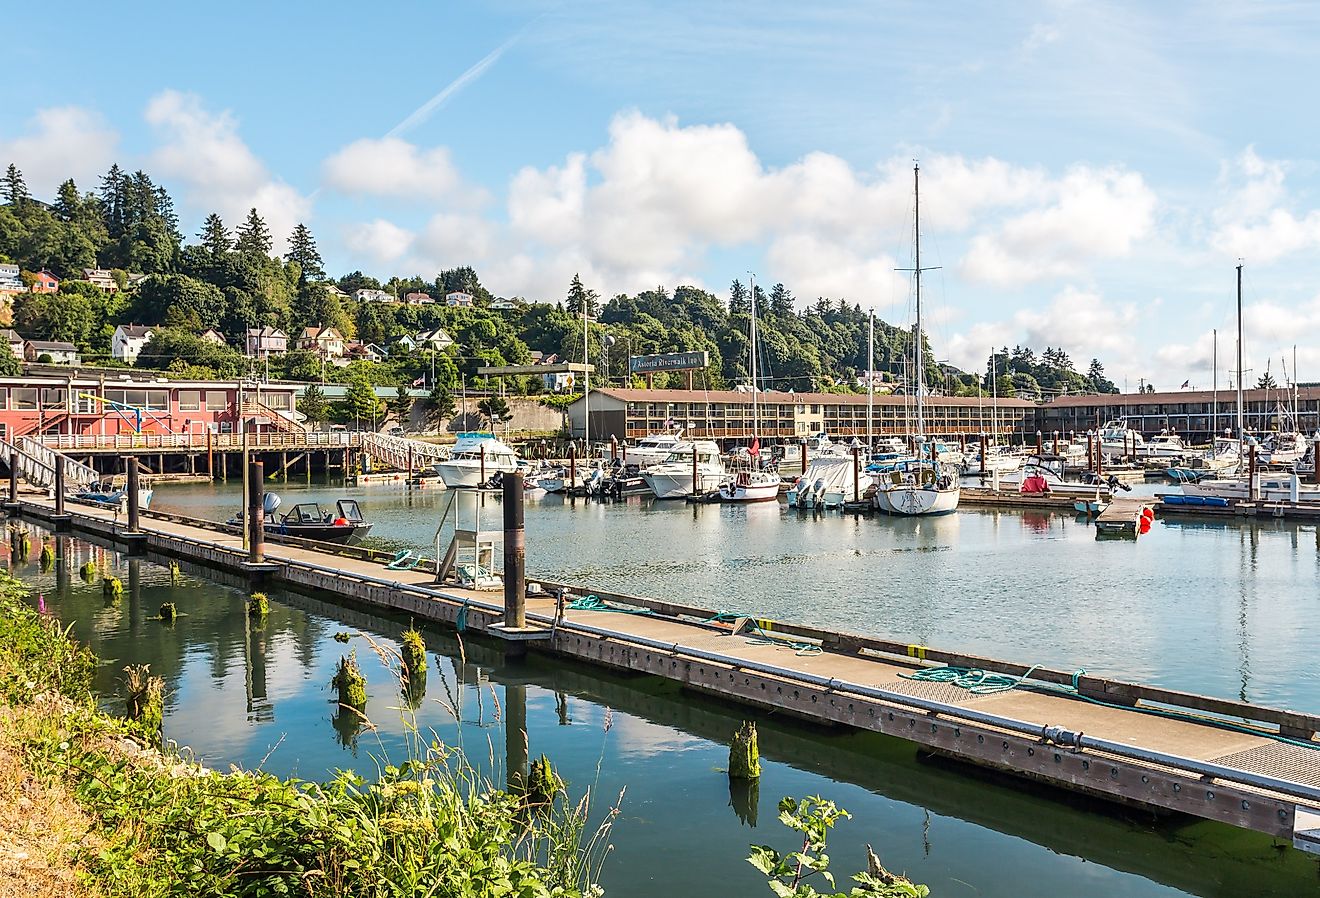 Boat pier near the Riverwalk Inn, Astoria, Oregon. Image credit Victoria Ditkovsly via Shutterstock